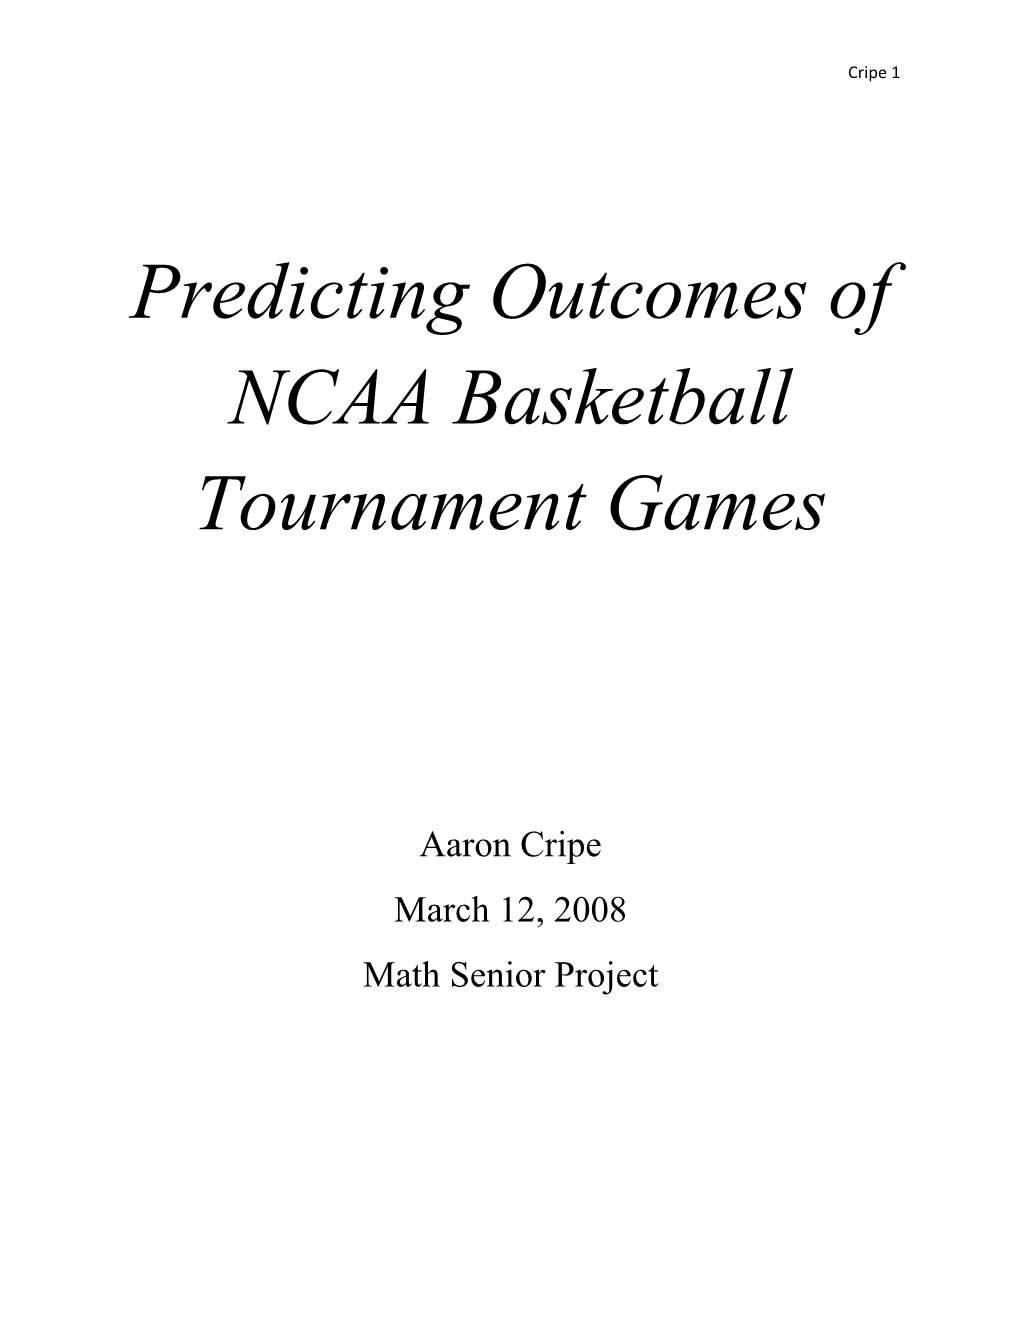 Predicting Outcomes of NCAA Basketball Tournament Games